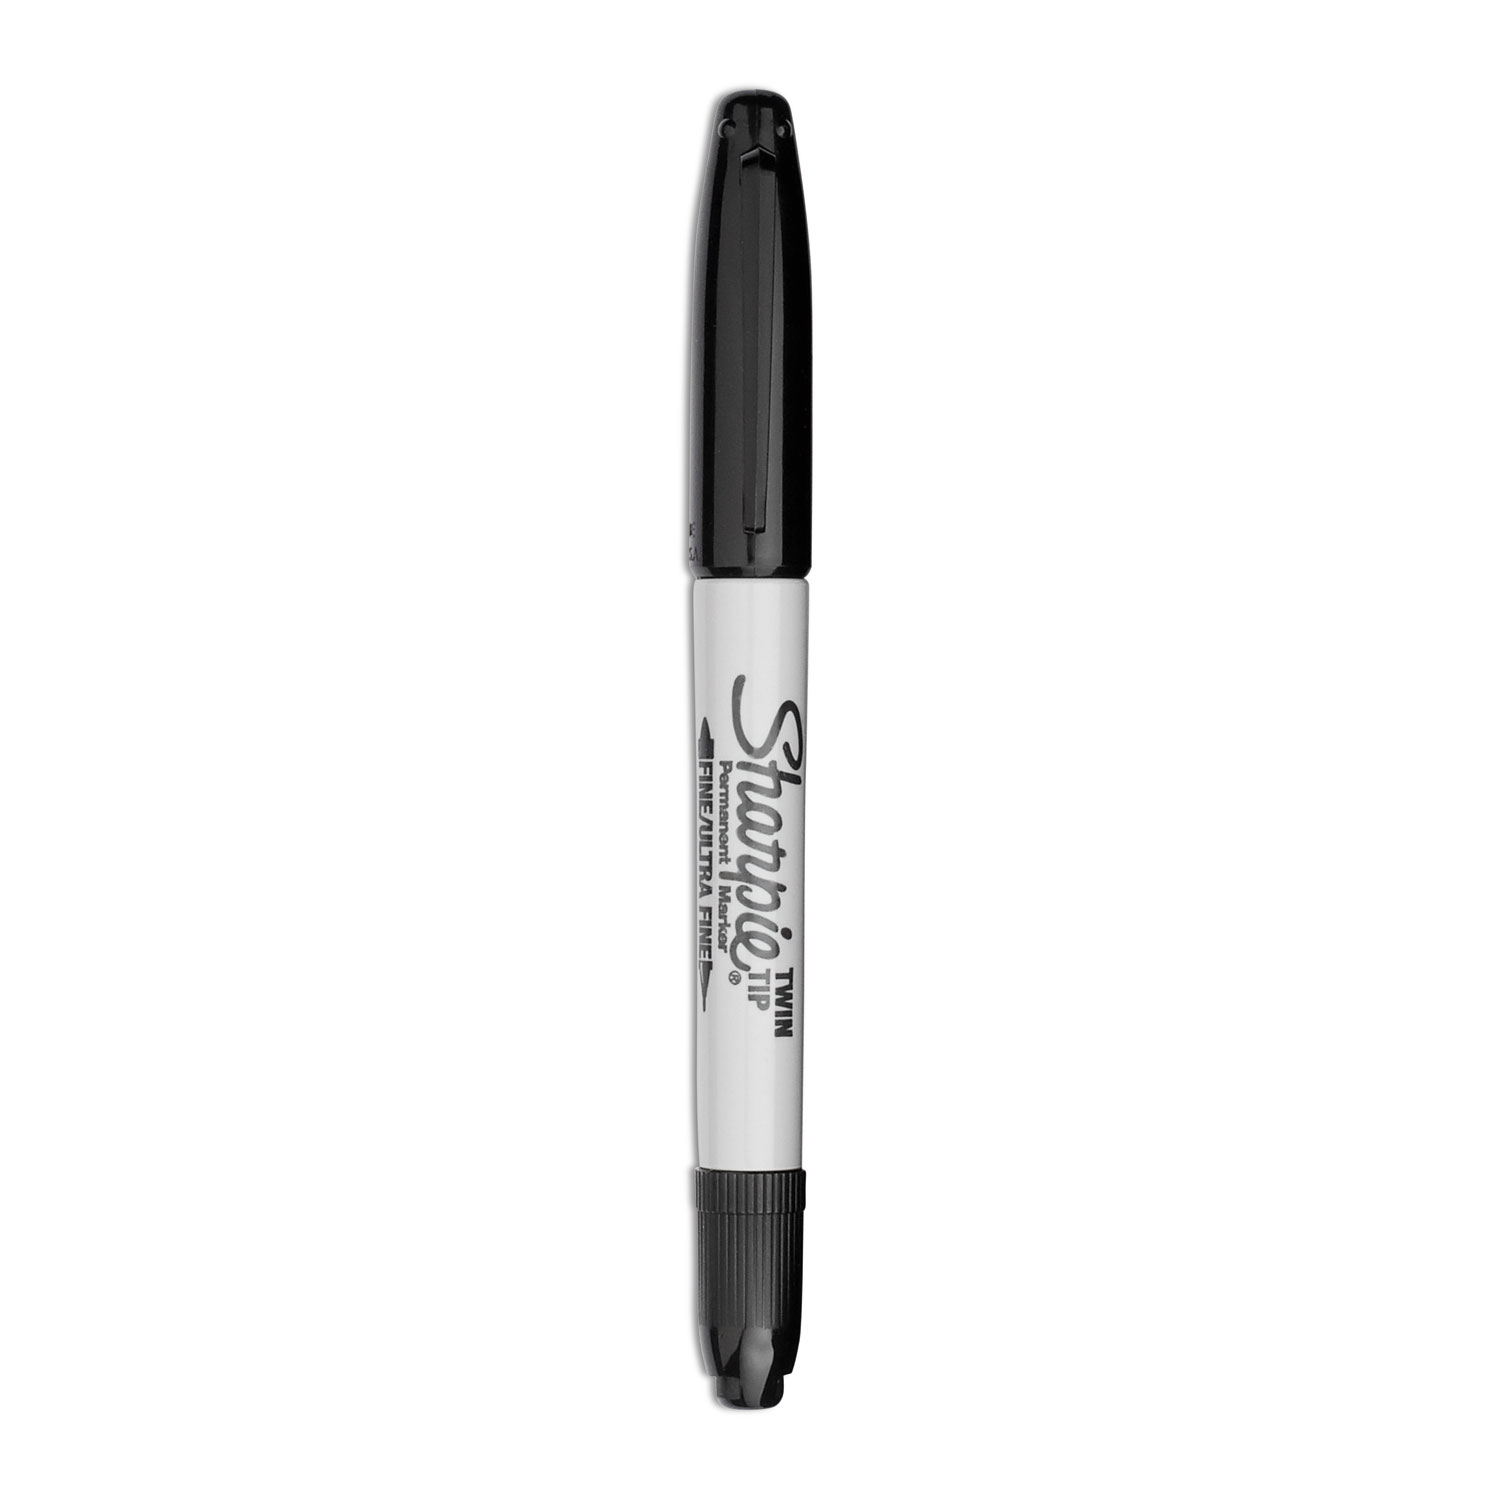 Sharpie Ultra Fine Tip Permanent Marker Extra-Fine Needle Tip Black